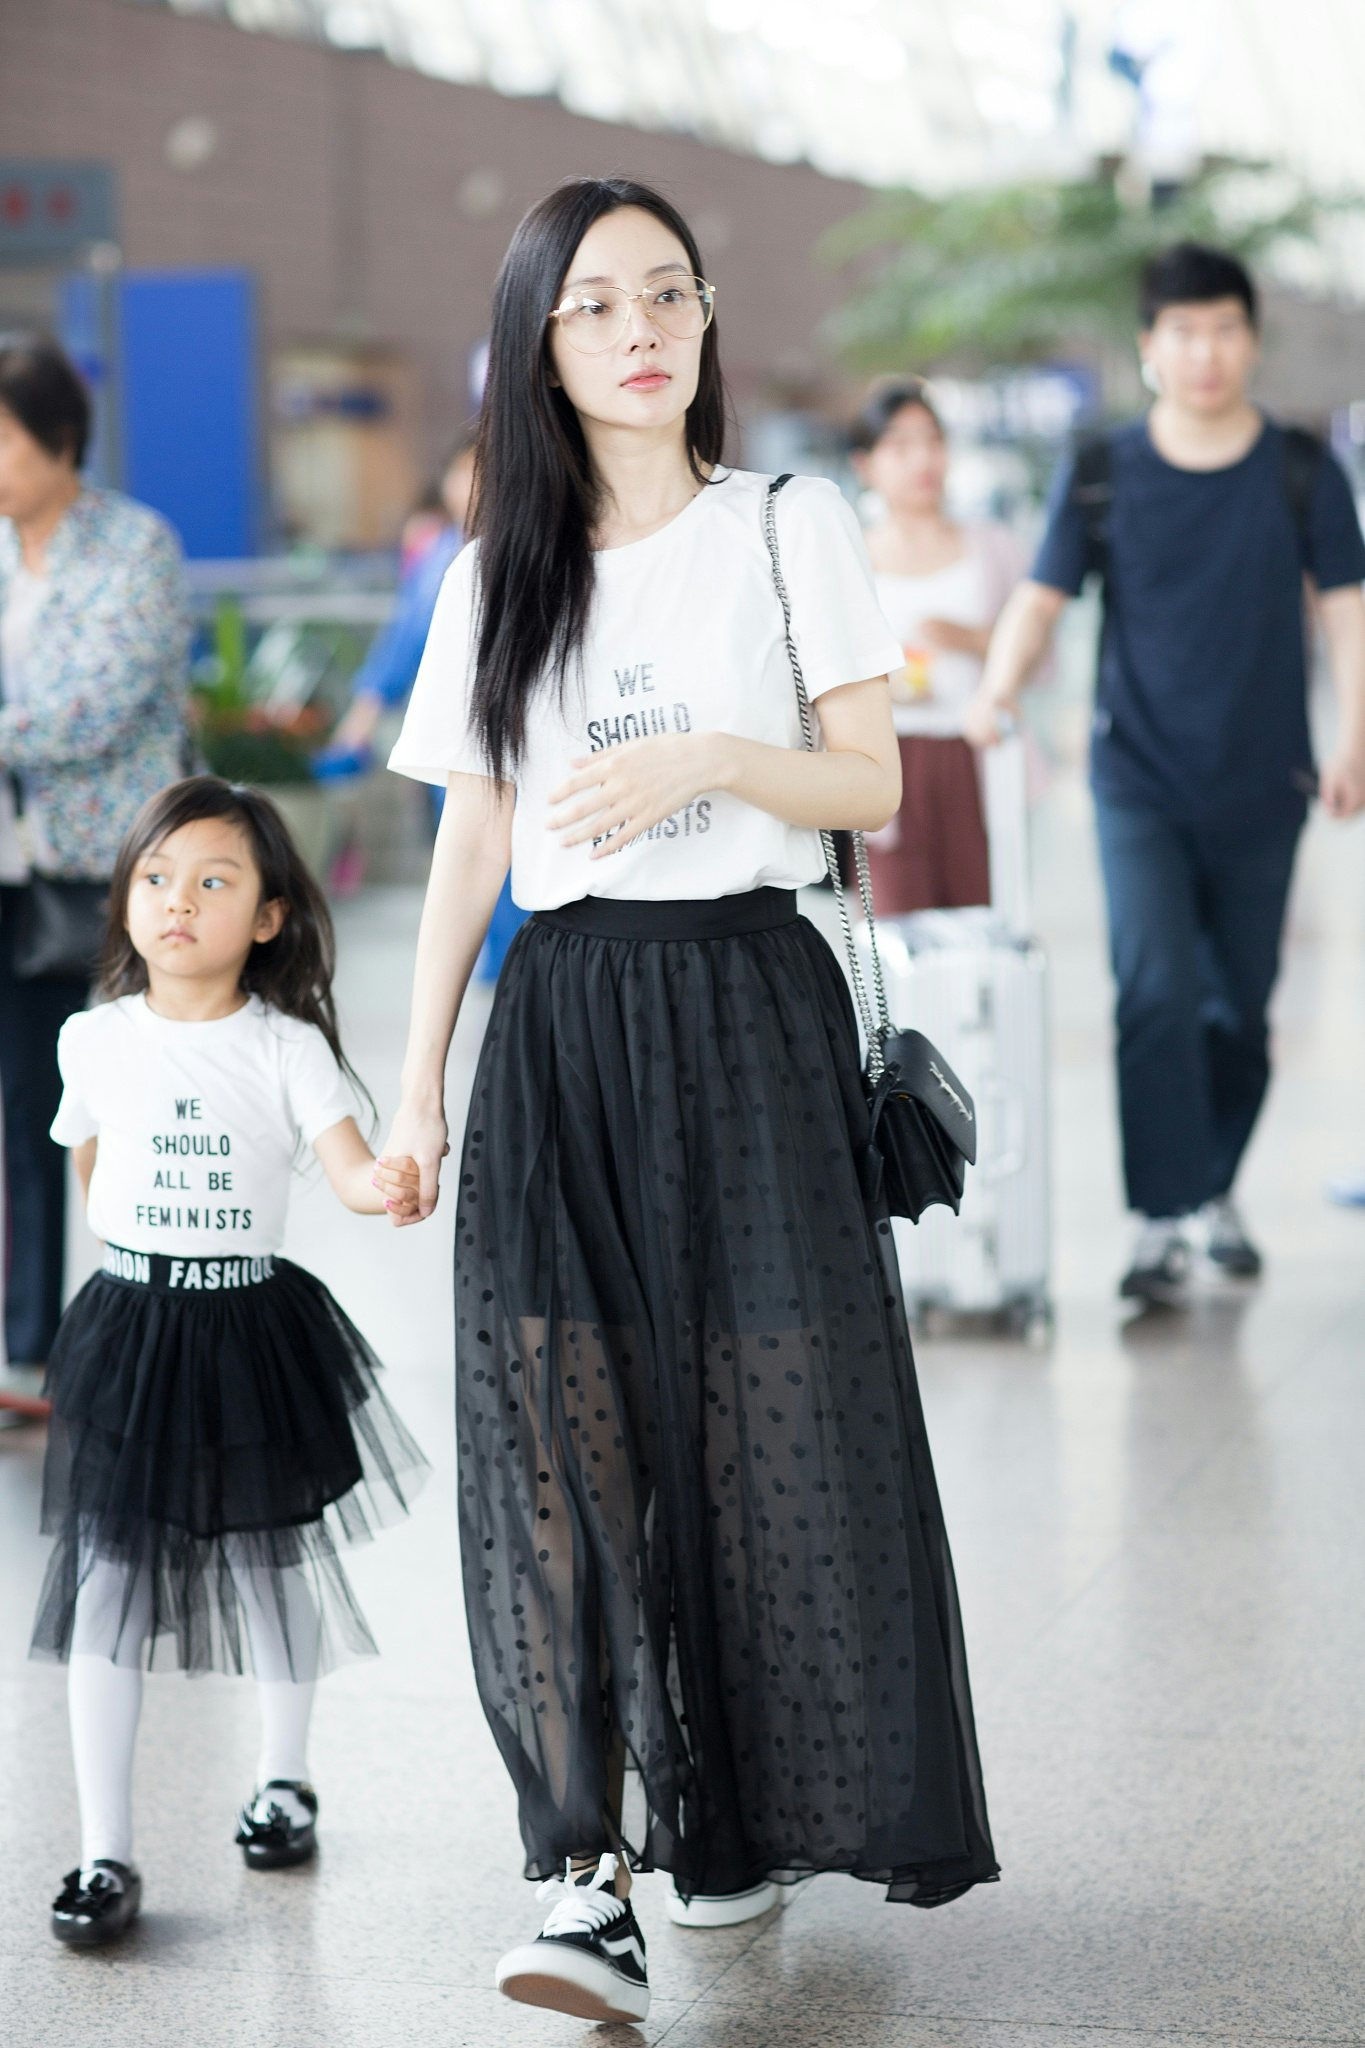 Chinese actress Li Xiaolu with her daughter Tian Xin, both in Dior dress. (Image via VCG)